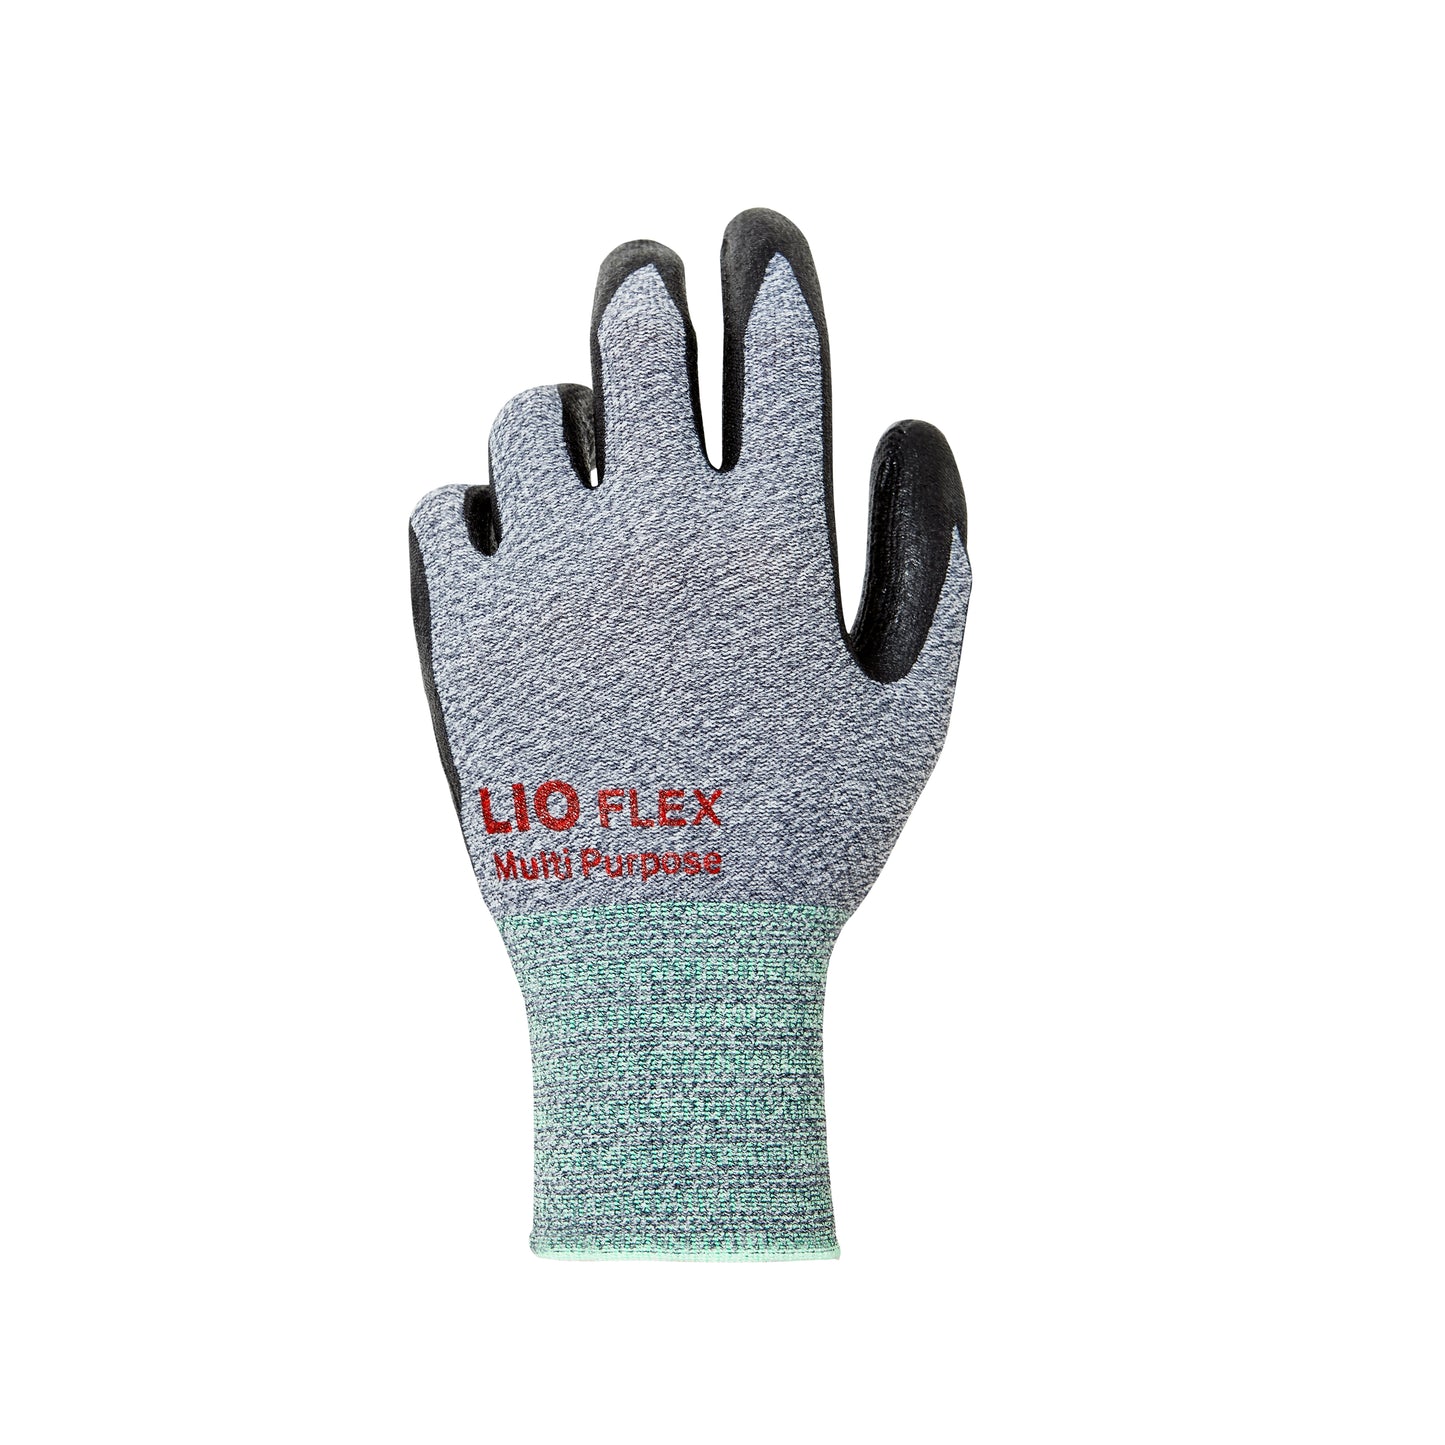 LIO FLEX Multi Purpose NBR Foam Coated Work Gloves